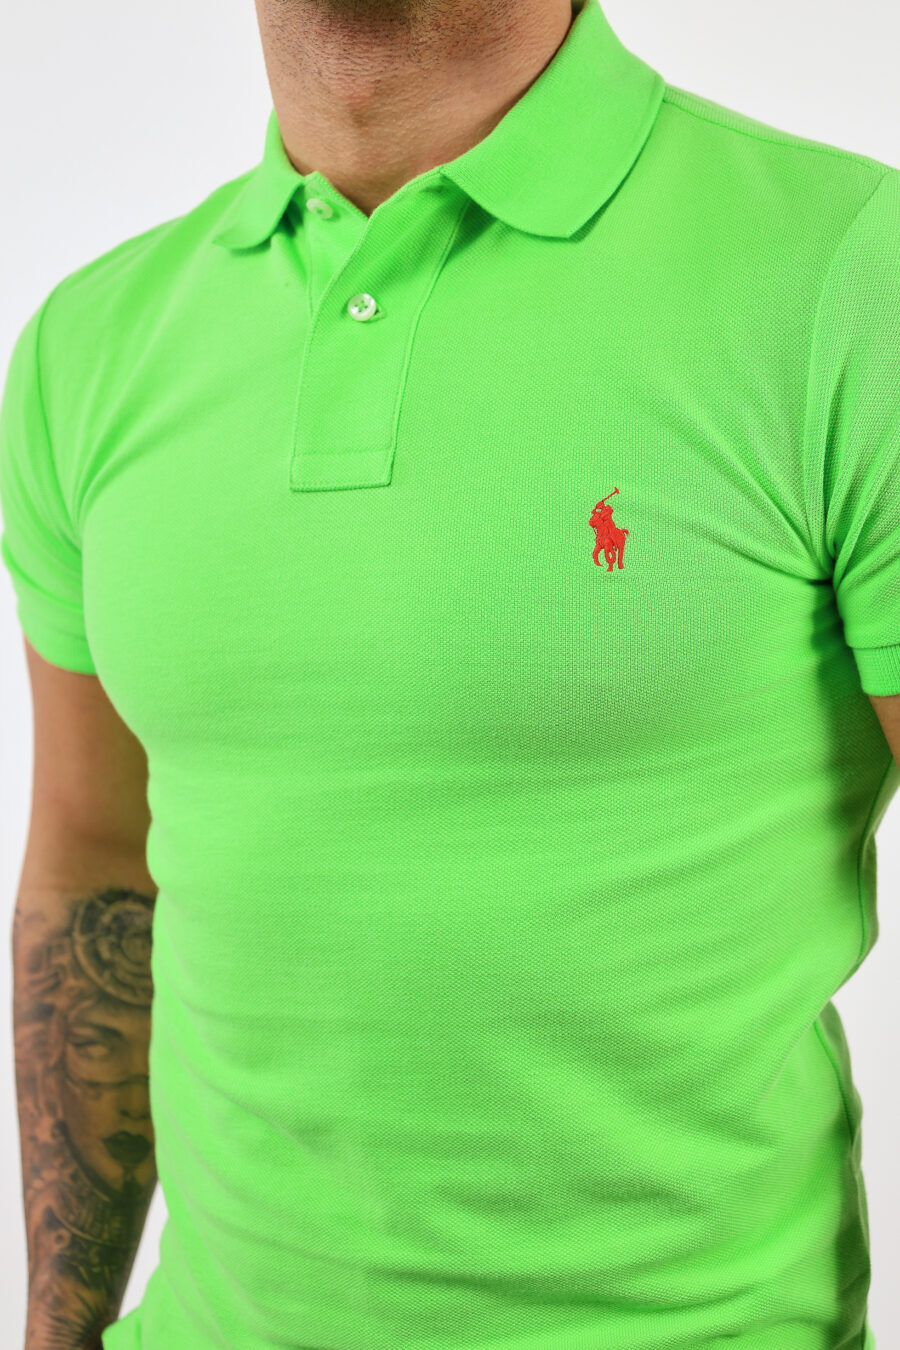 Hellgrünes Poloshirt mit Mini-Logo "Polo" - BLS Fashion 299 1